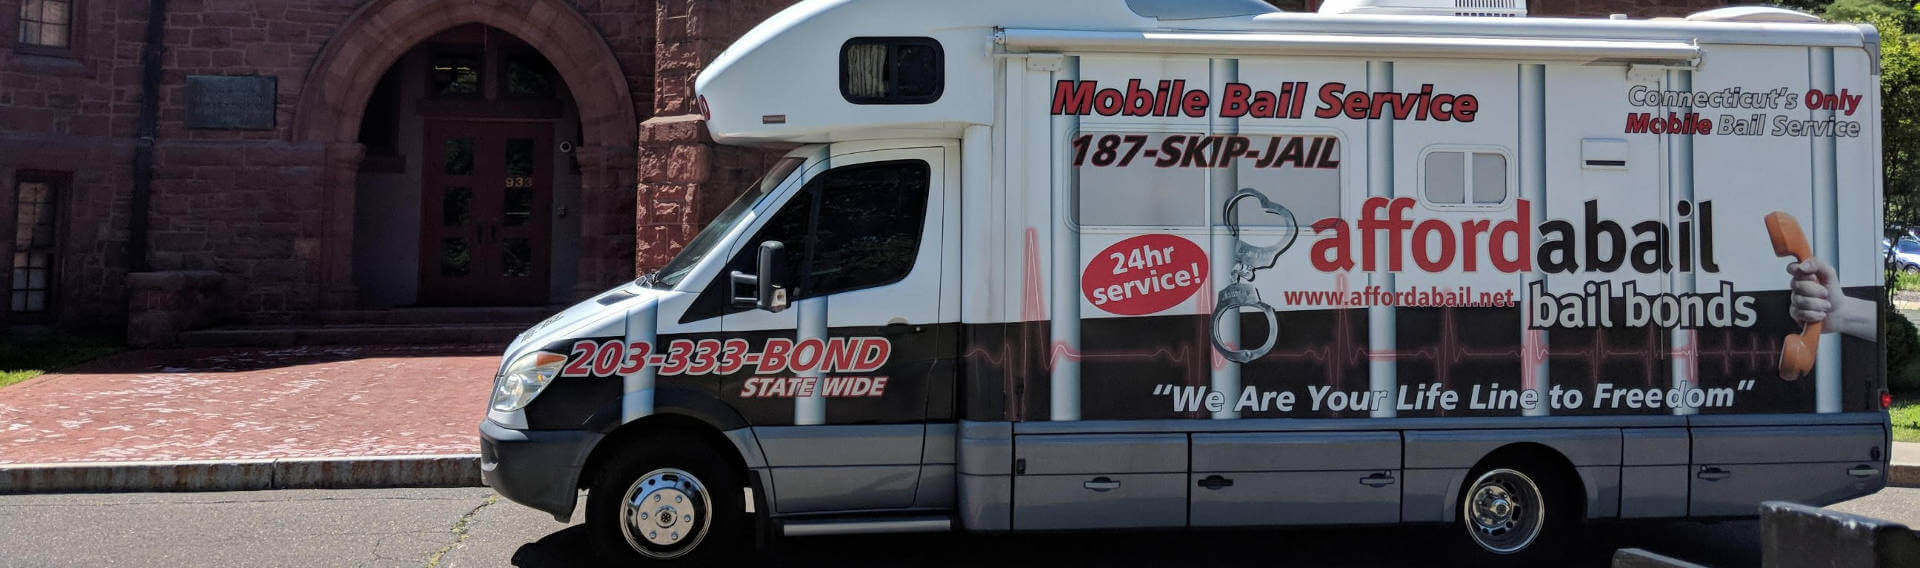 Mobile bail bonds service in Glastonbury CT